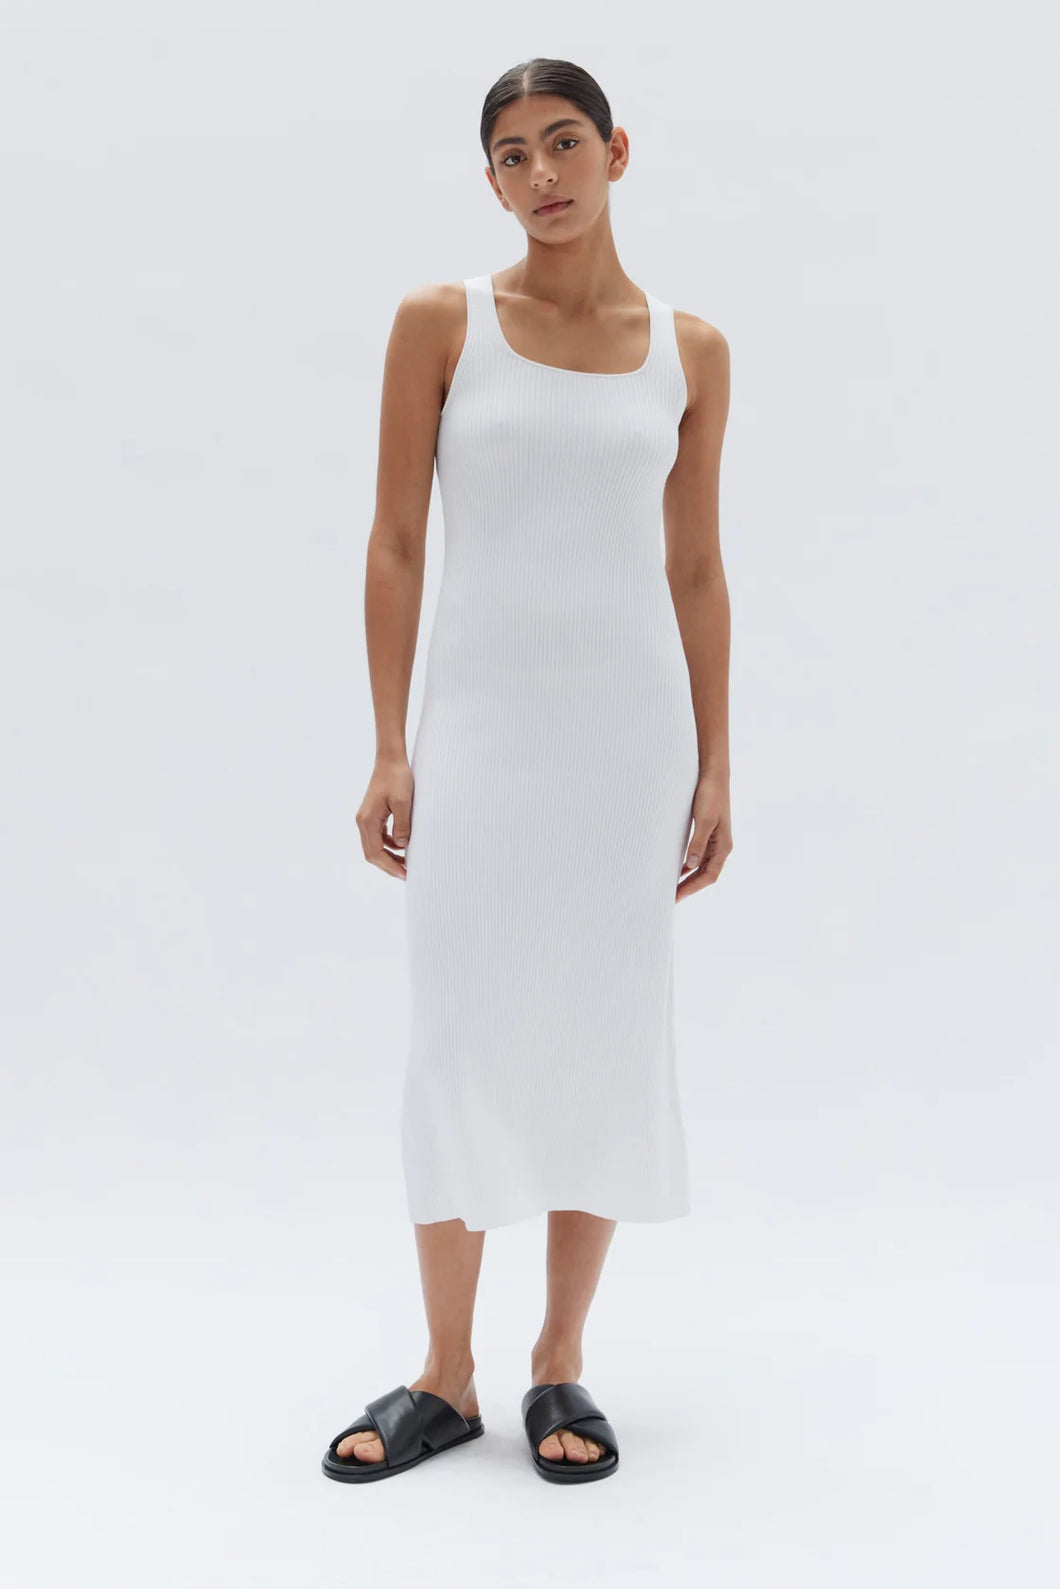 Adrianna Knit Dress | White